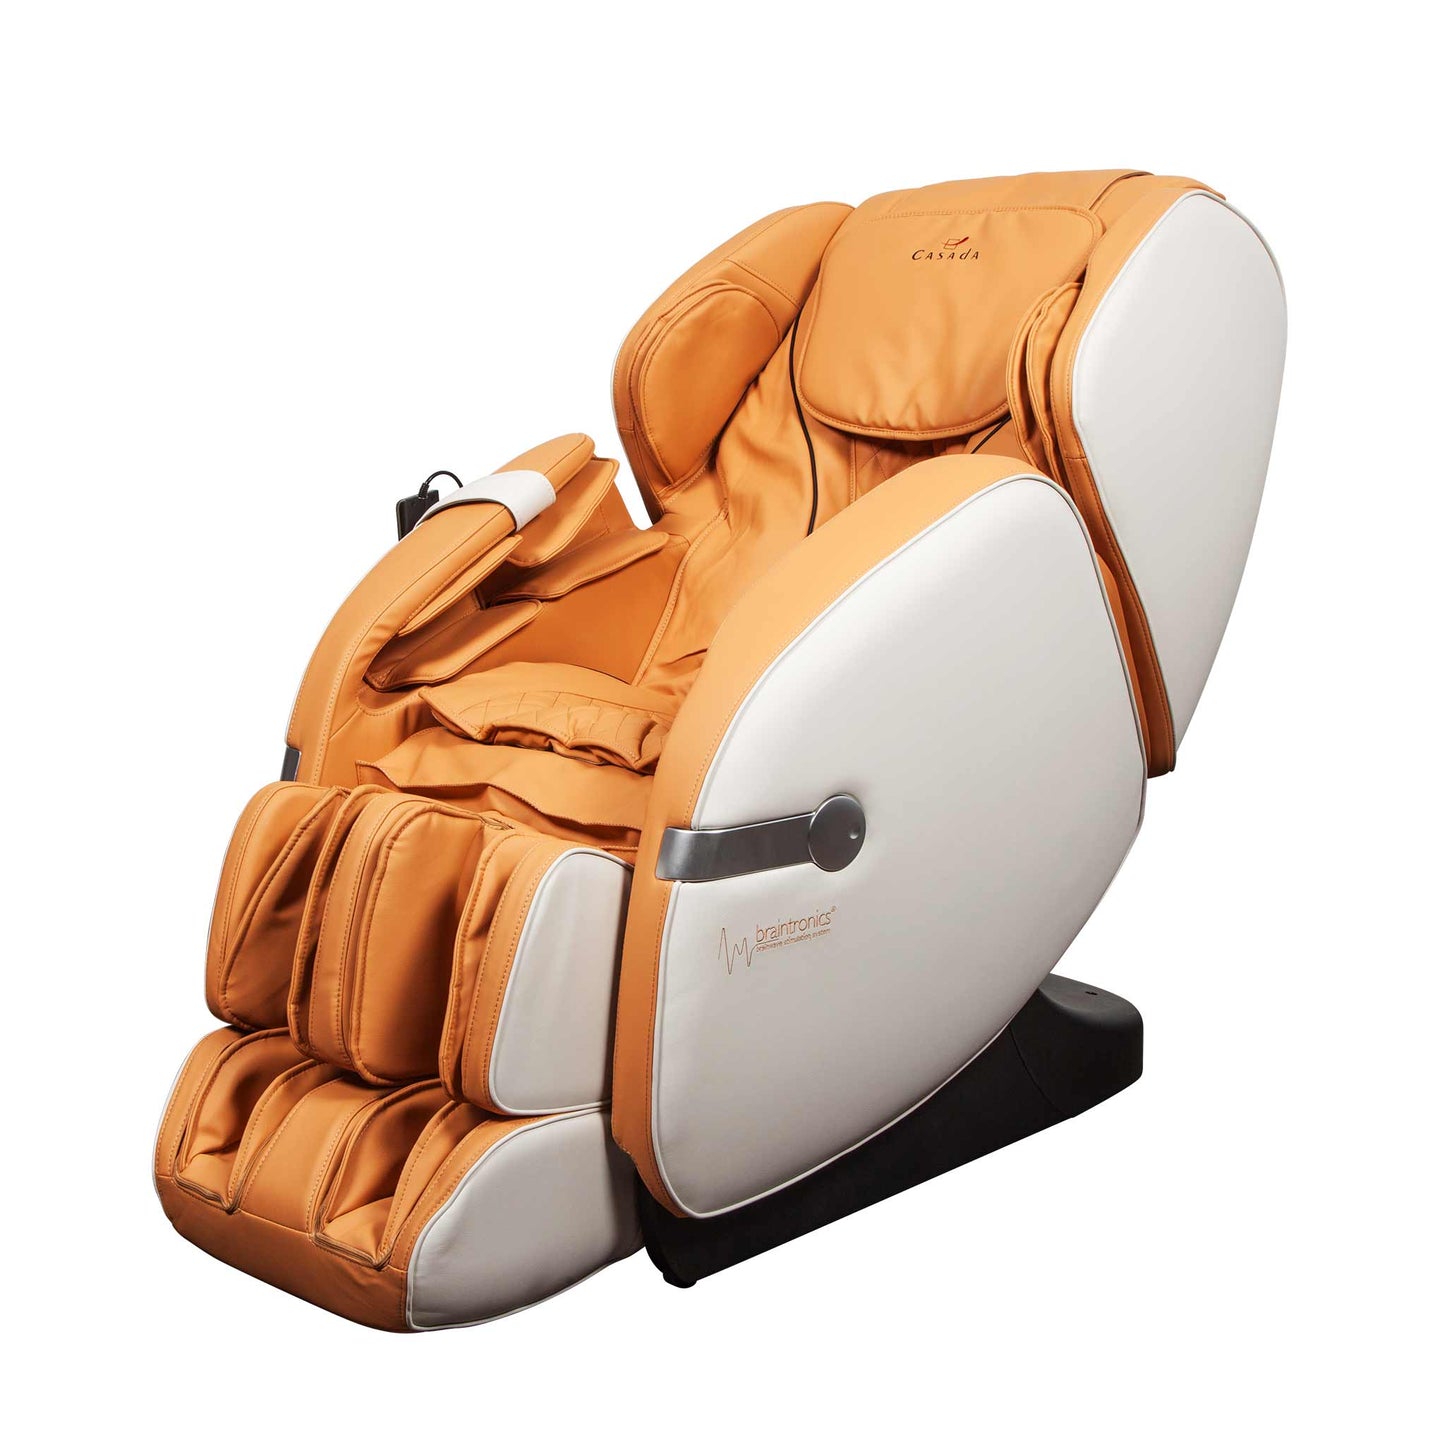 Betasonic II Massage Chair with braintronics®